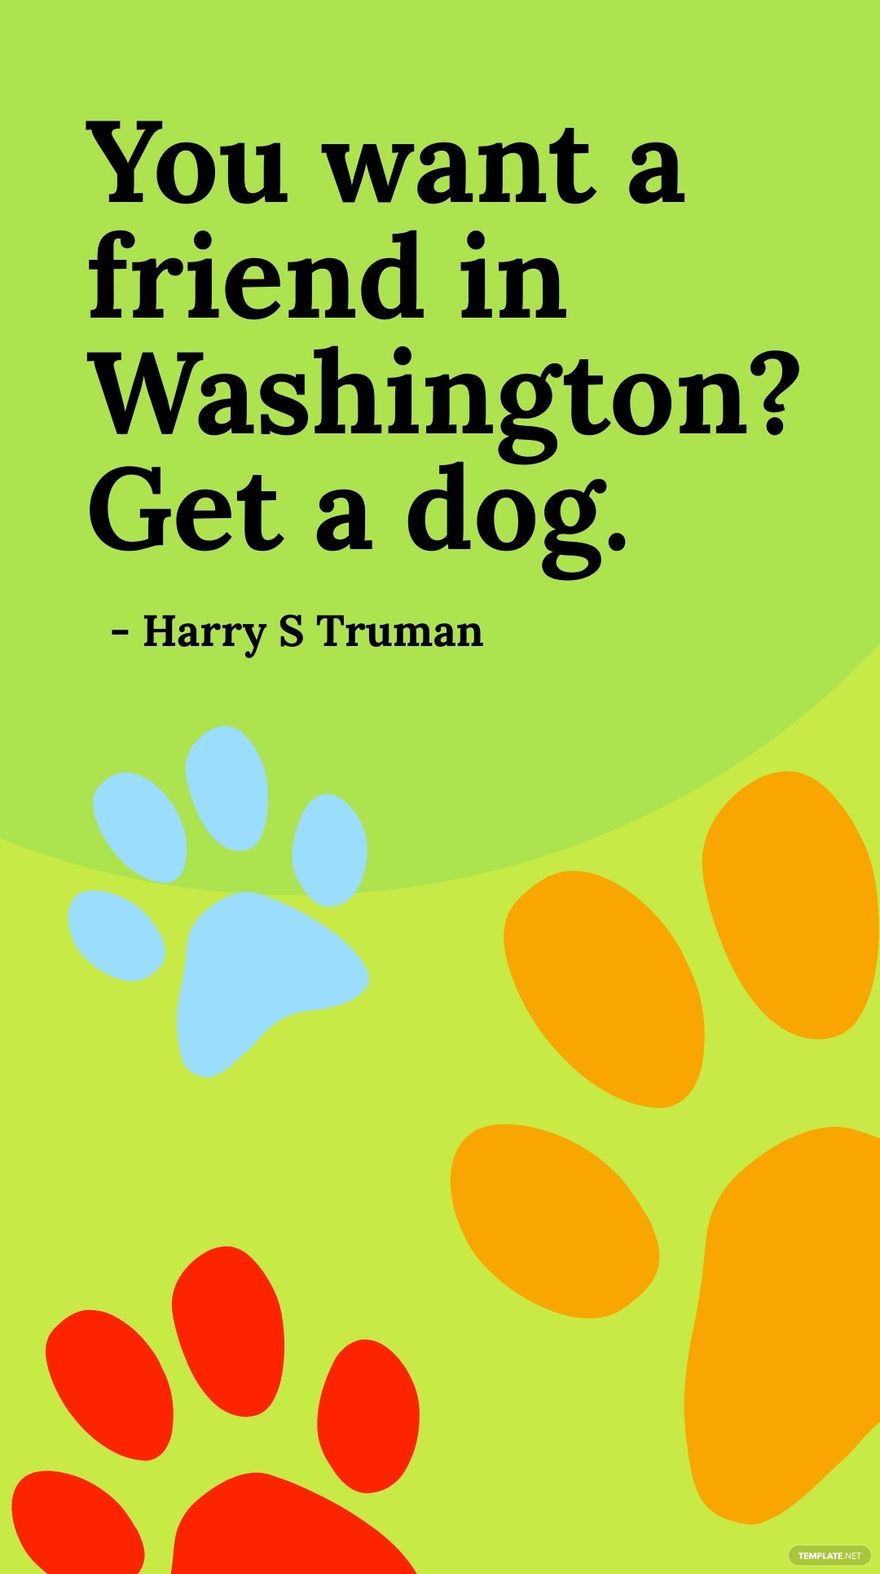 Harry S Truman - You want a friend in Washington? Get a dog. in JPG